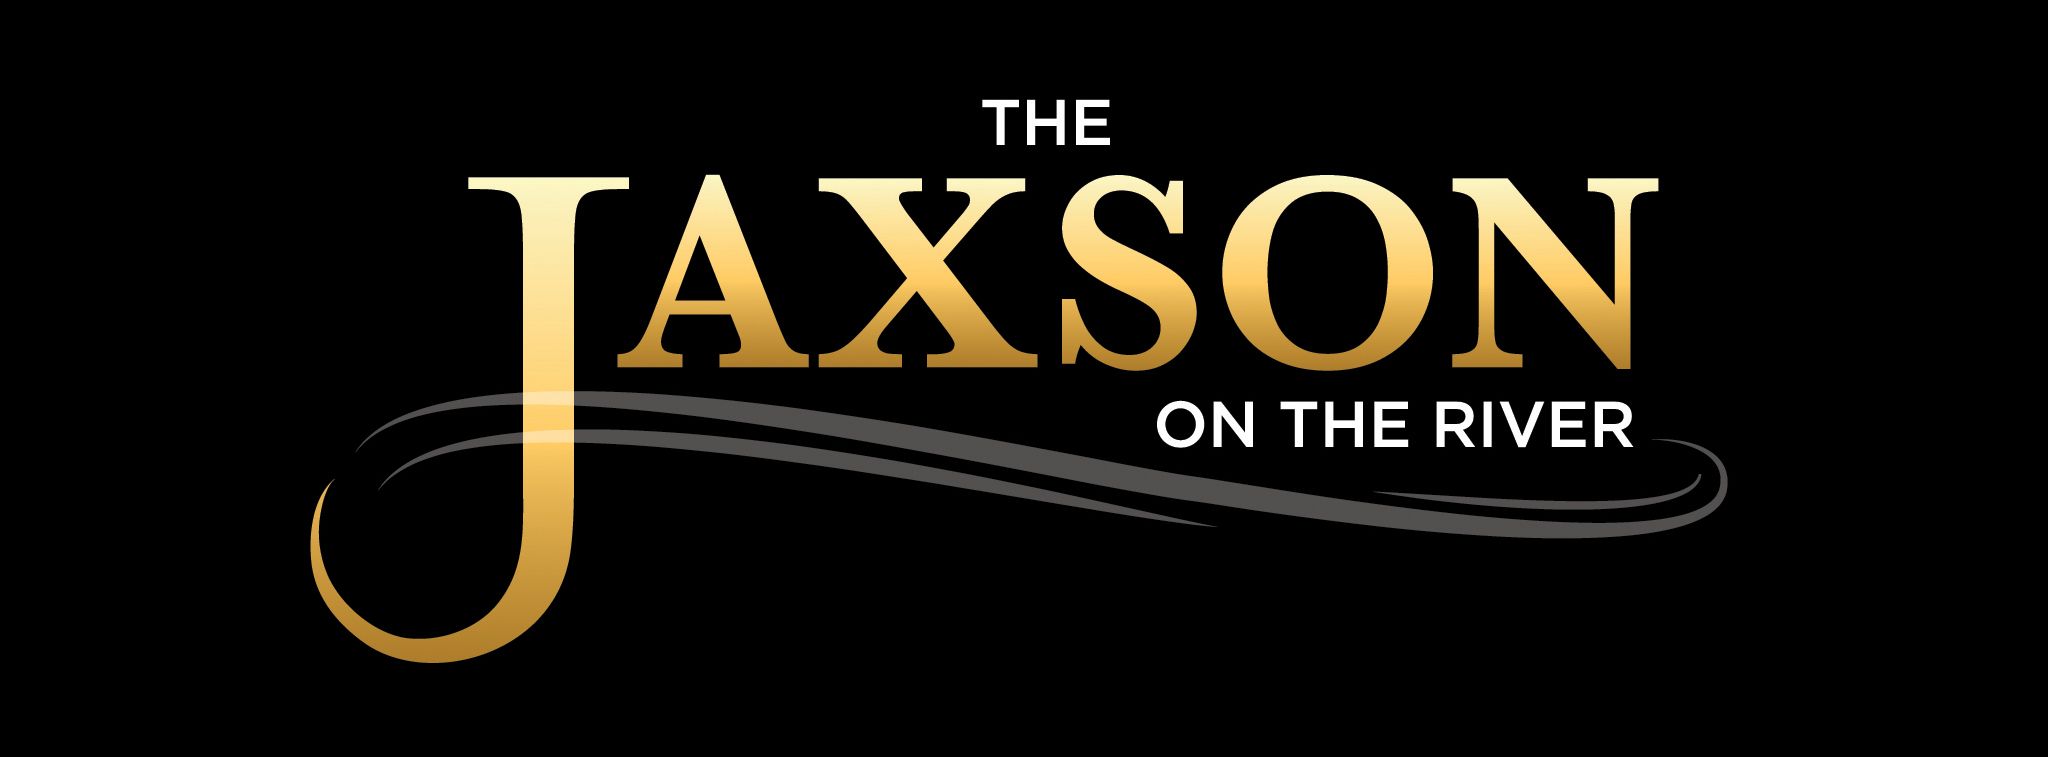 The Jaxson